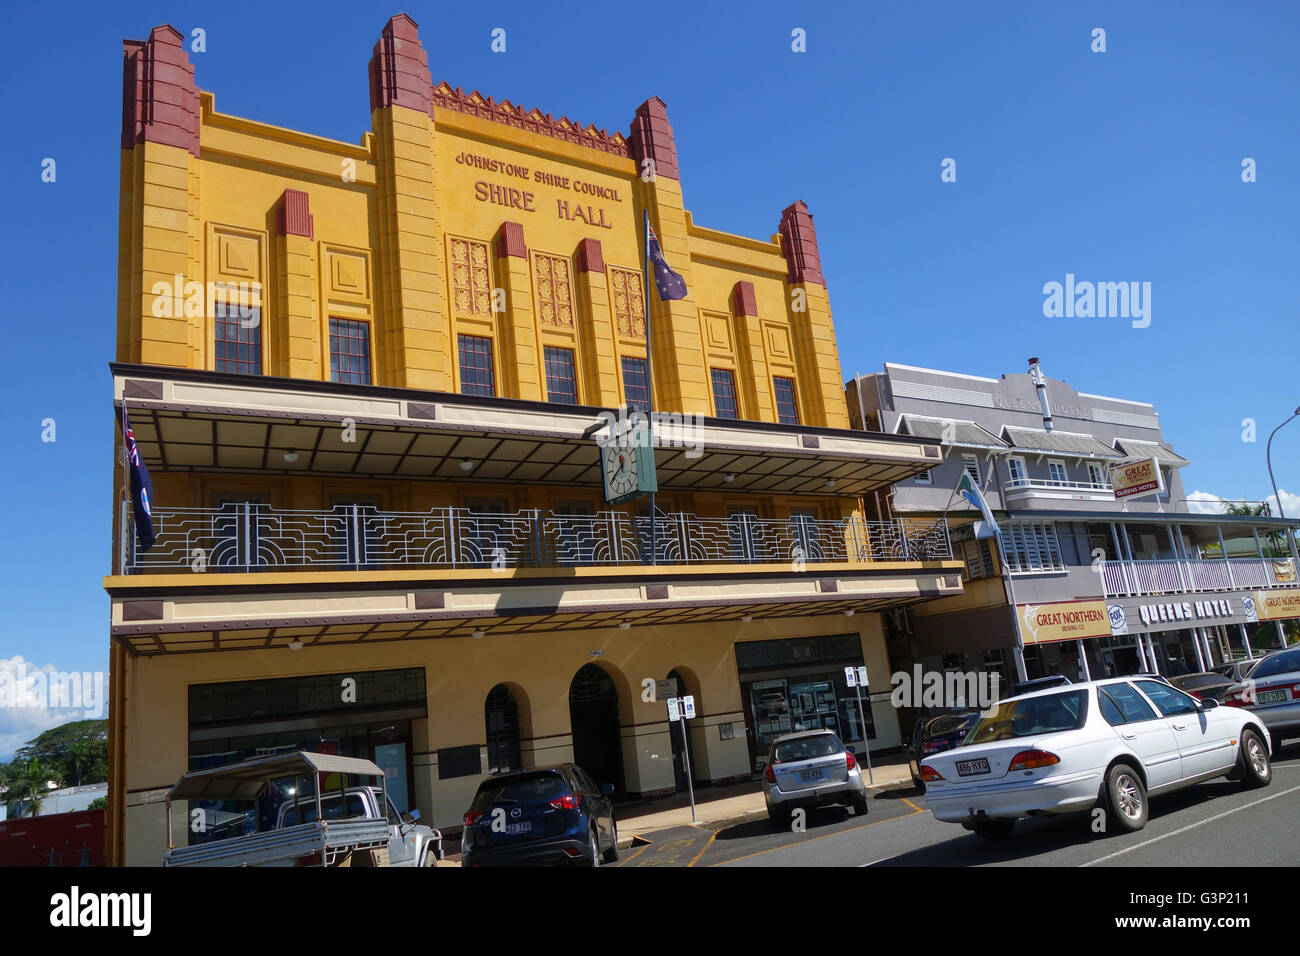 Johnstone Shire Council Hall next to Queens Hotel, Innisfail, far north Queensland, Australia. No PR or MR Stock Photo